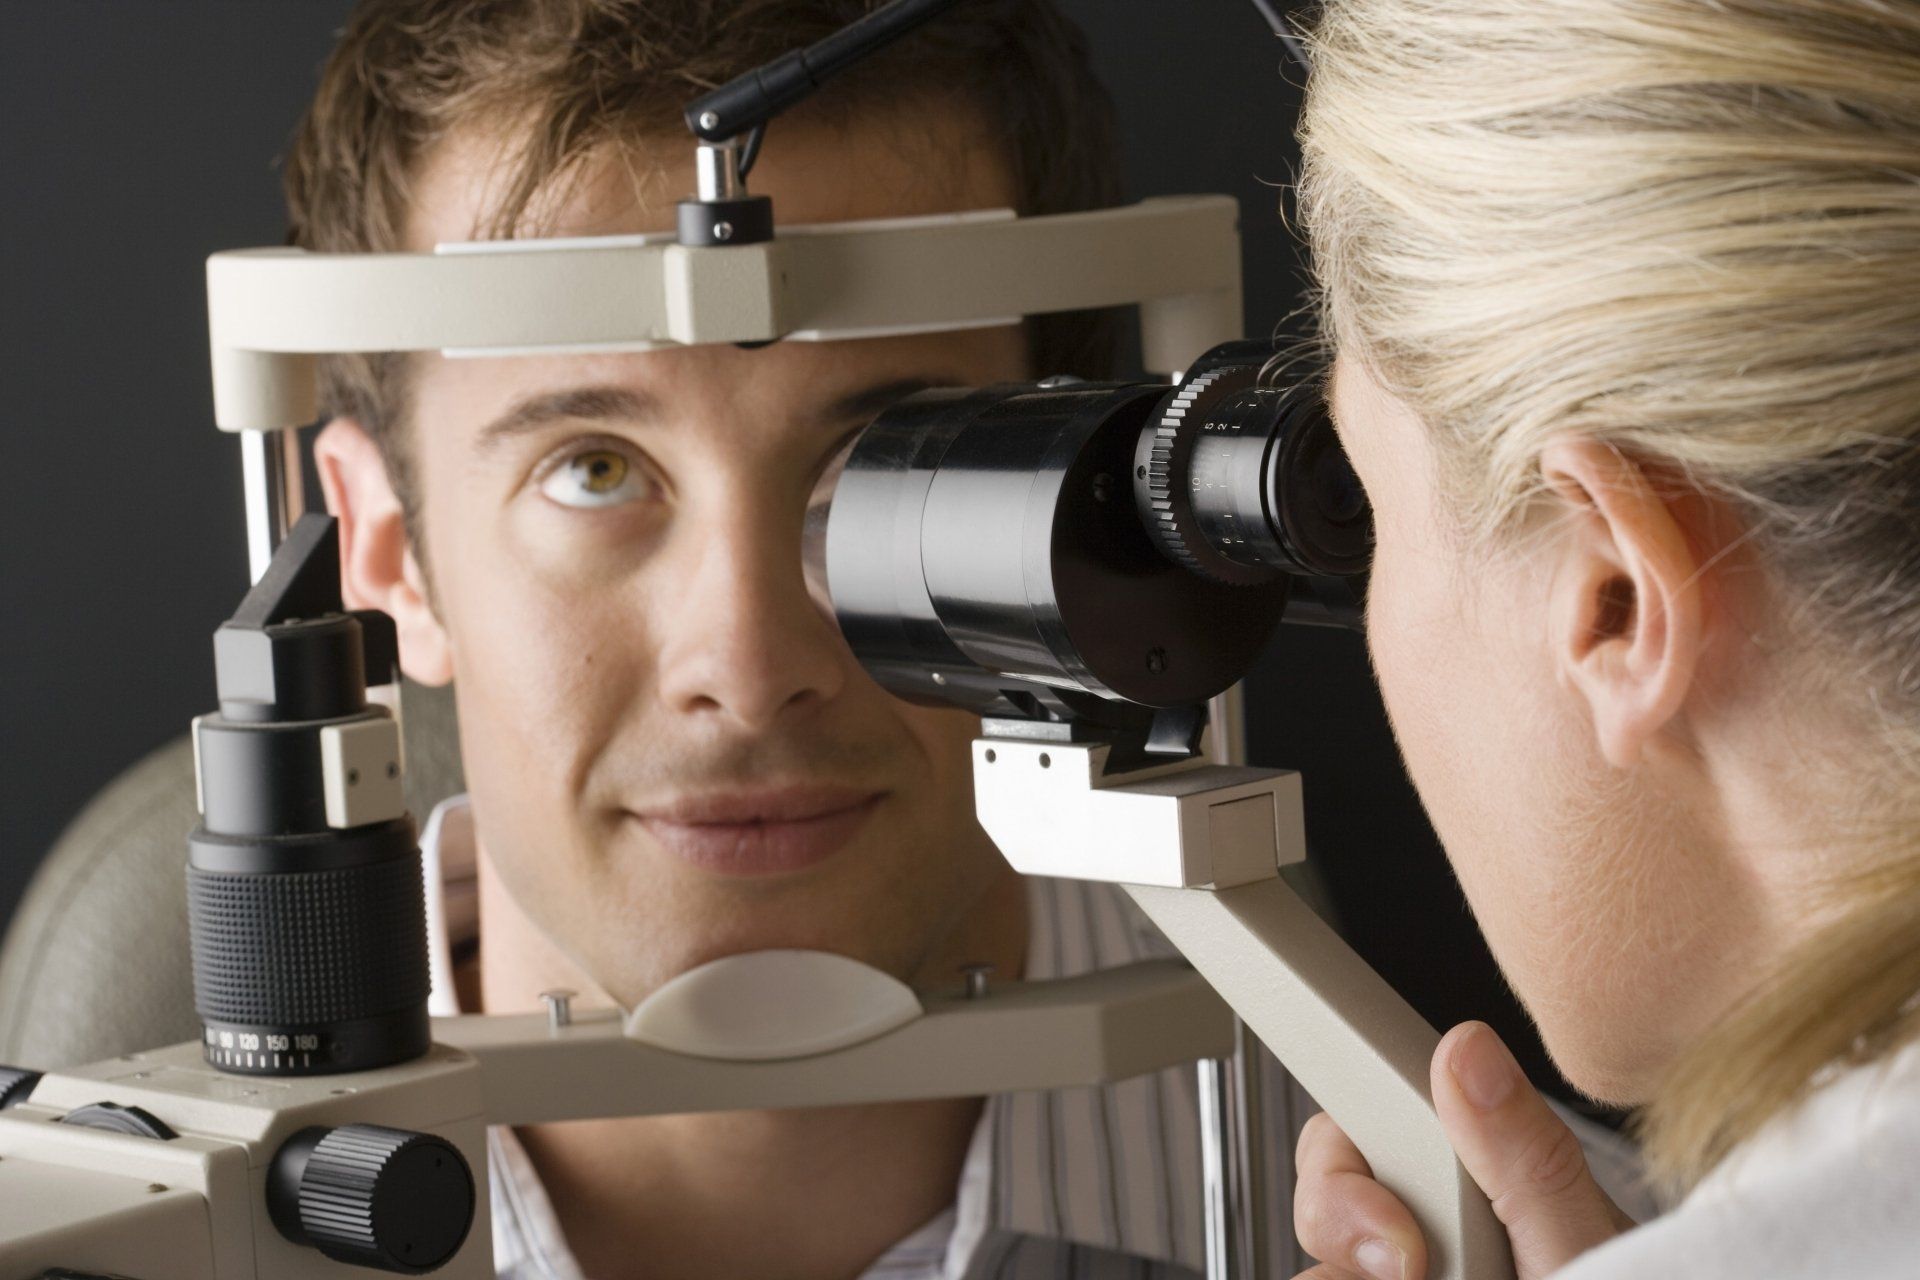 Slit lamp examination available at Eyewear Creations opticians.